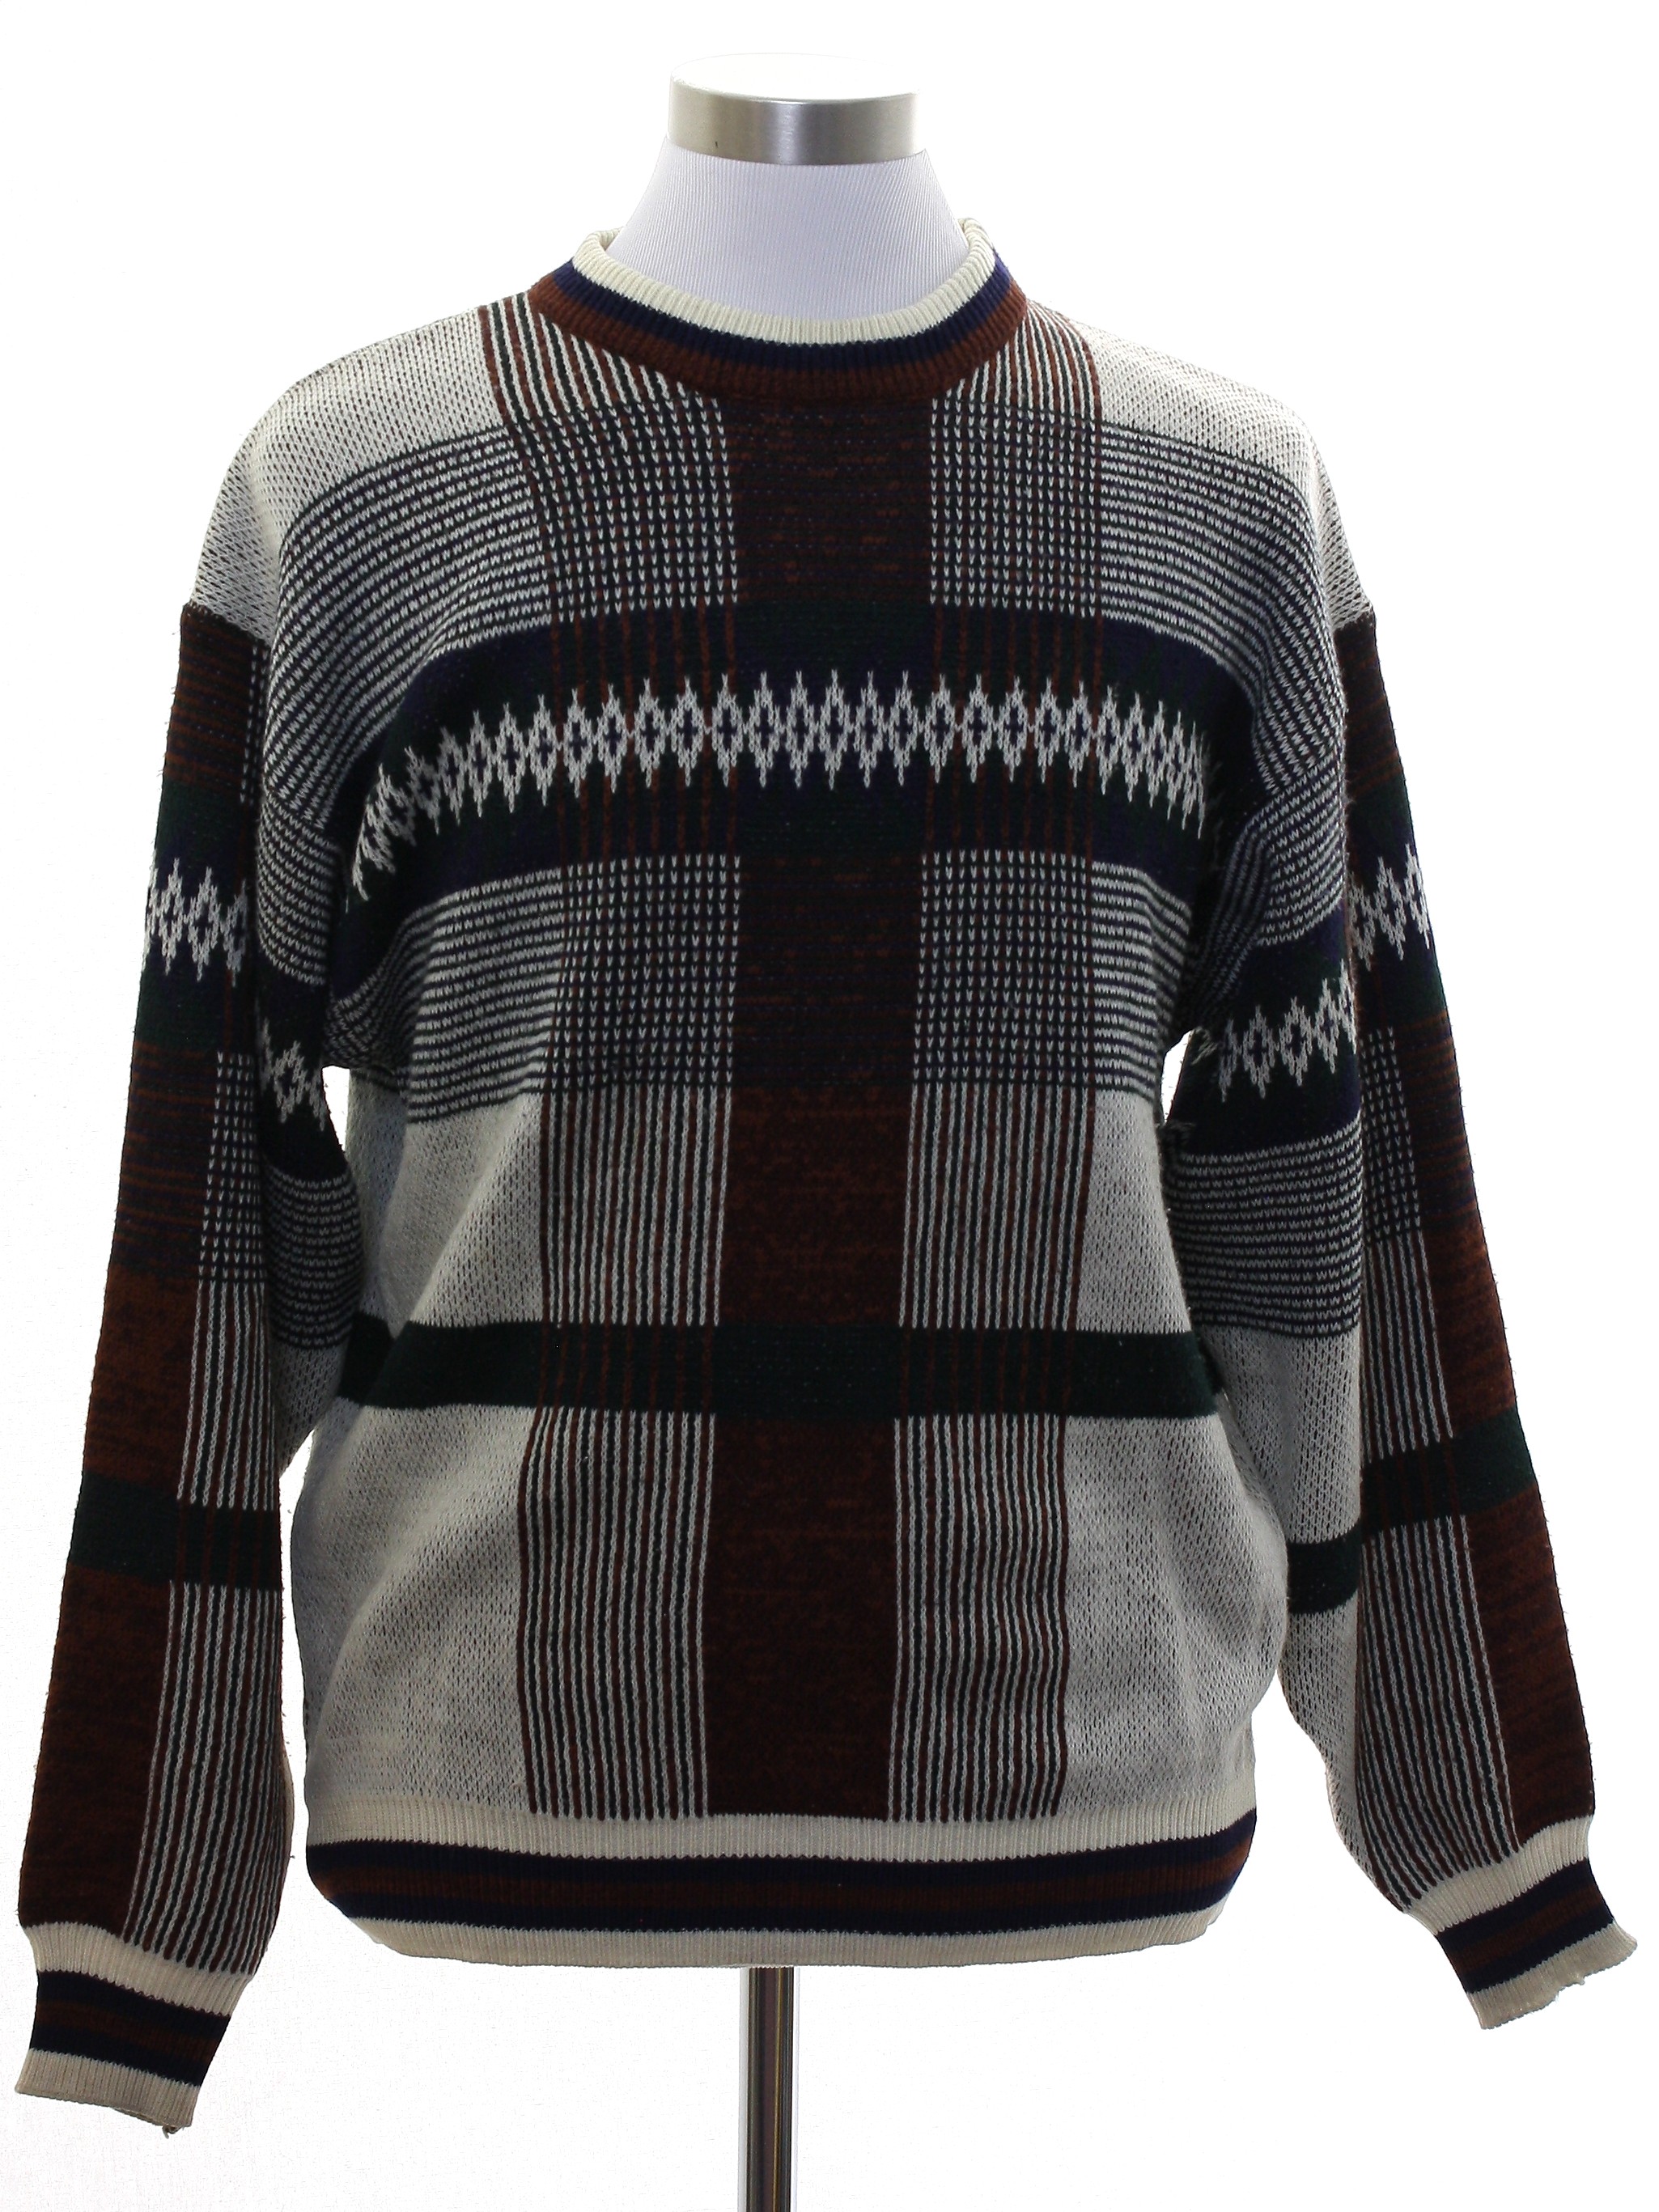 80s Retro Sweater: 80s -U Right- Mens ivory background acrylic wool ...